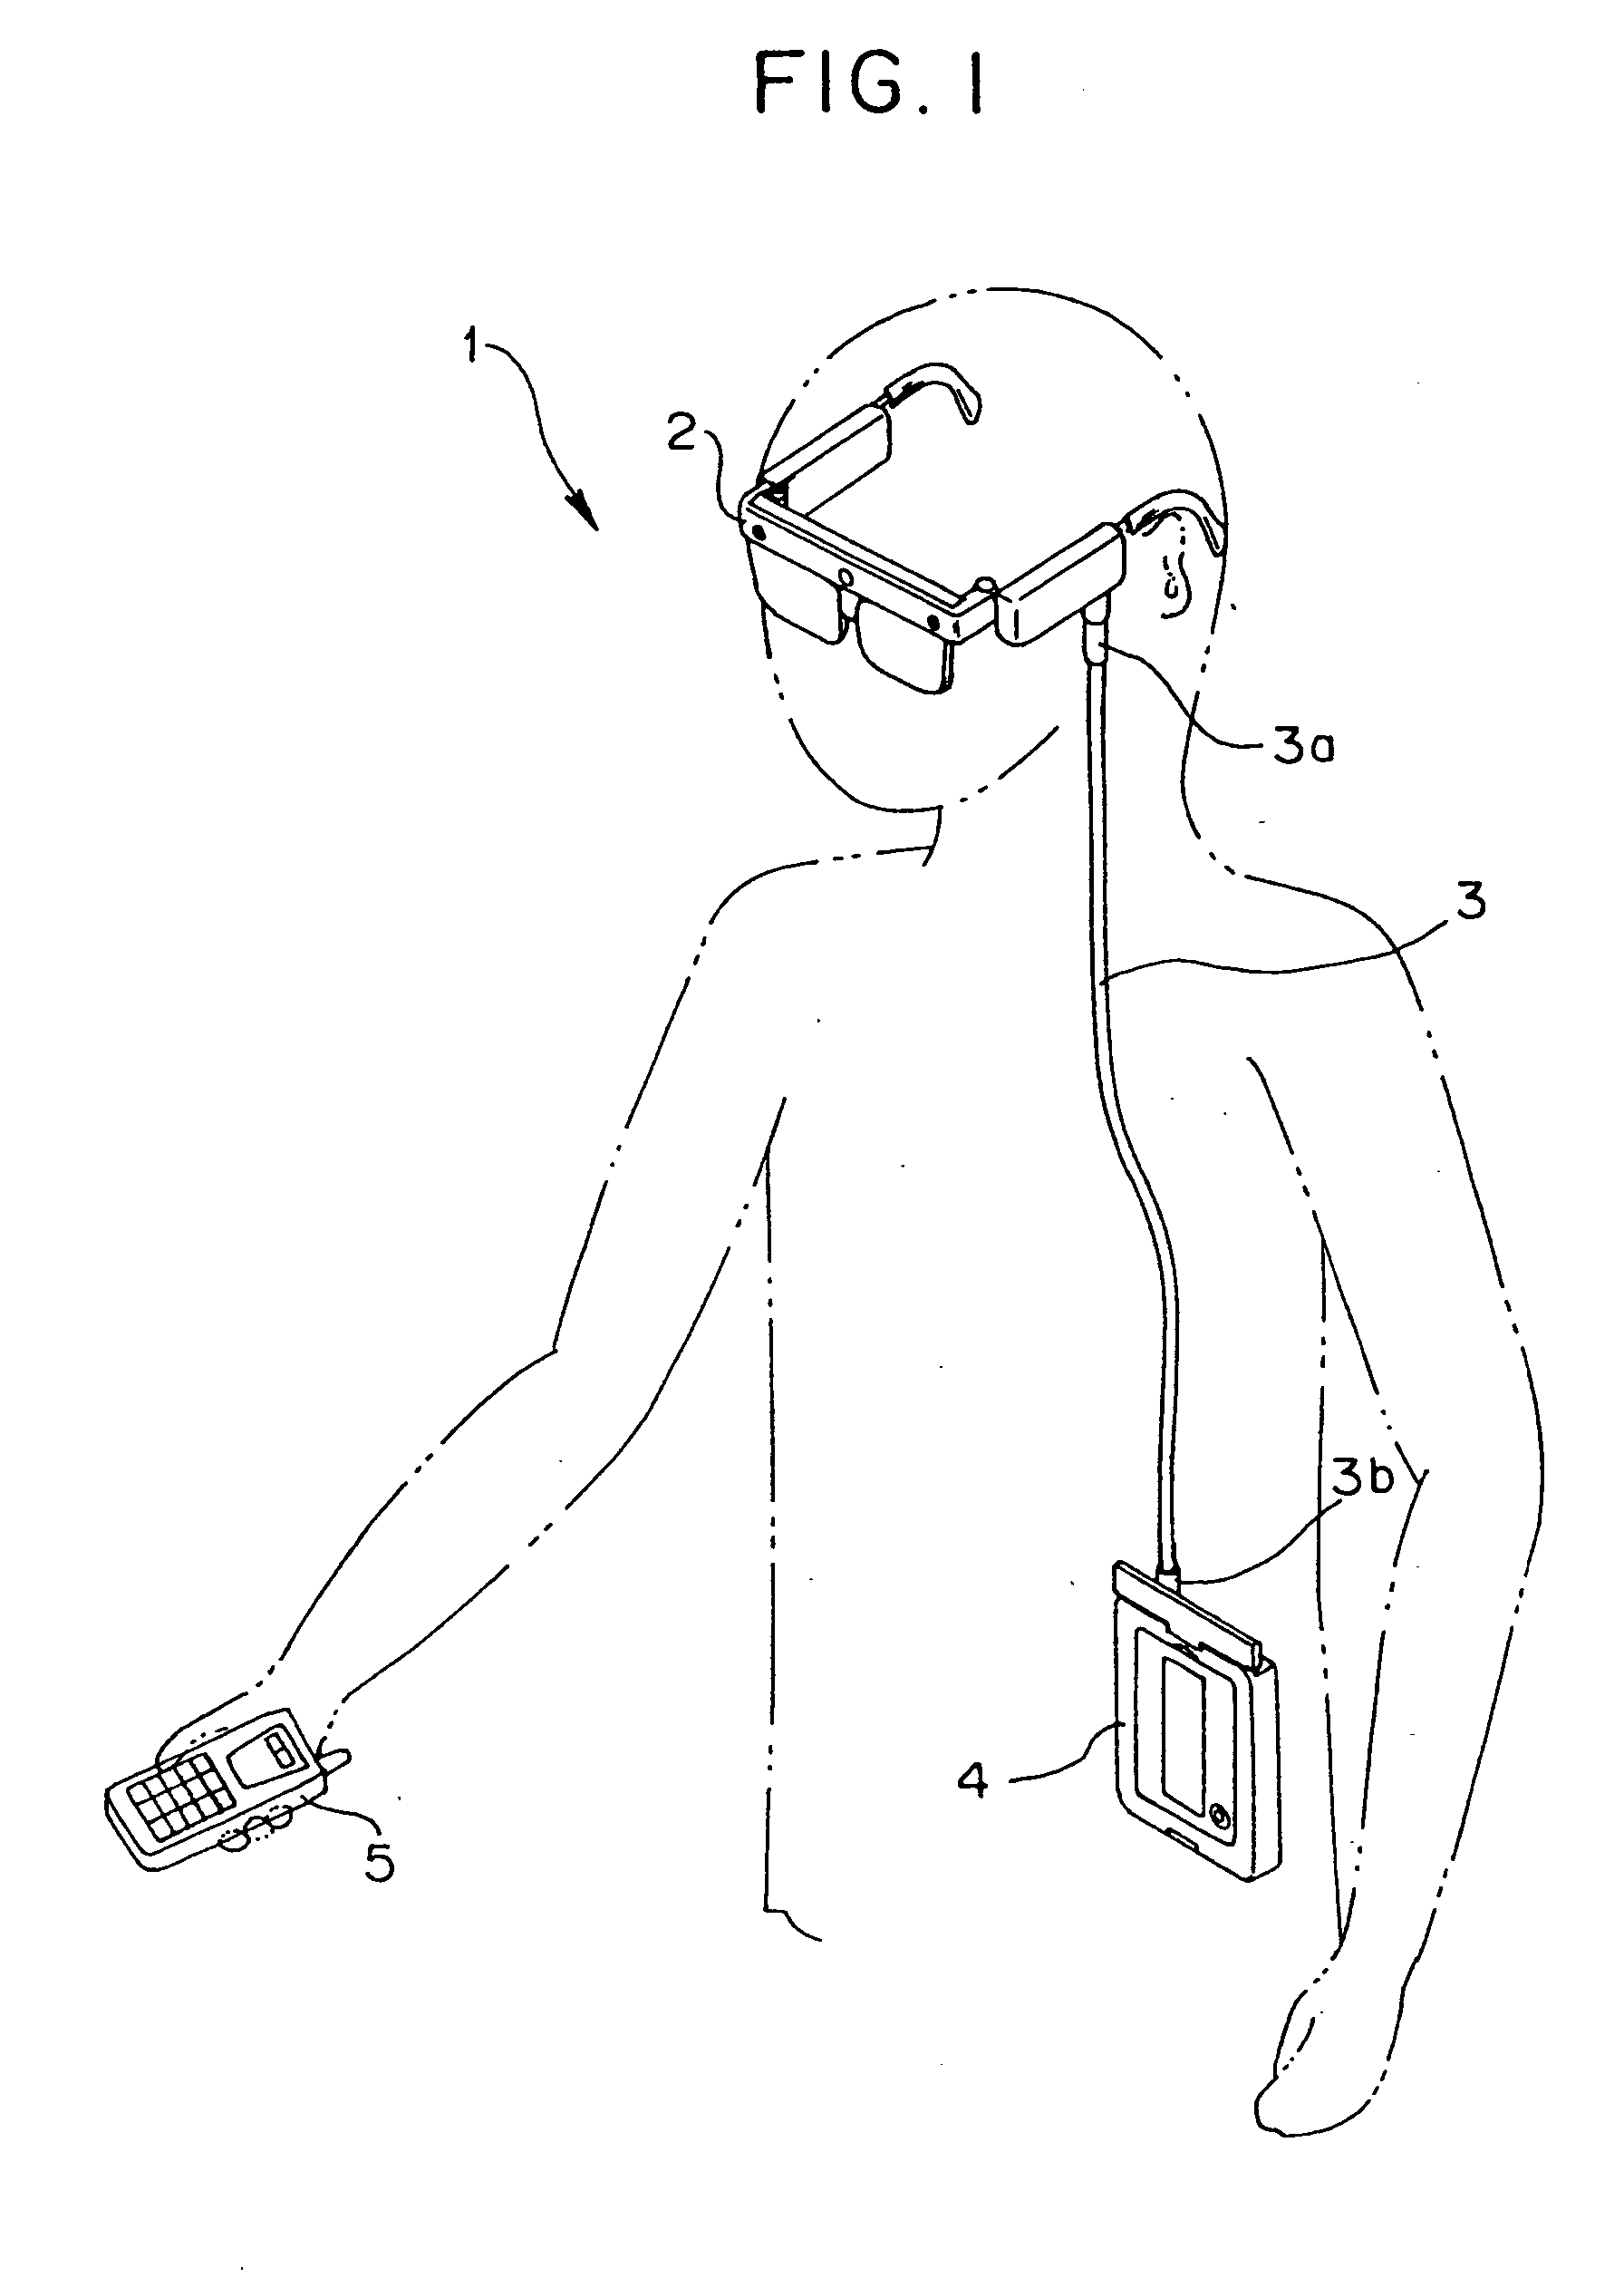 Head-mounted display apparatus